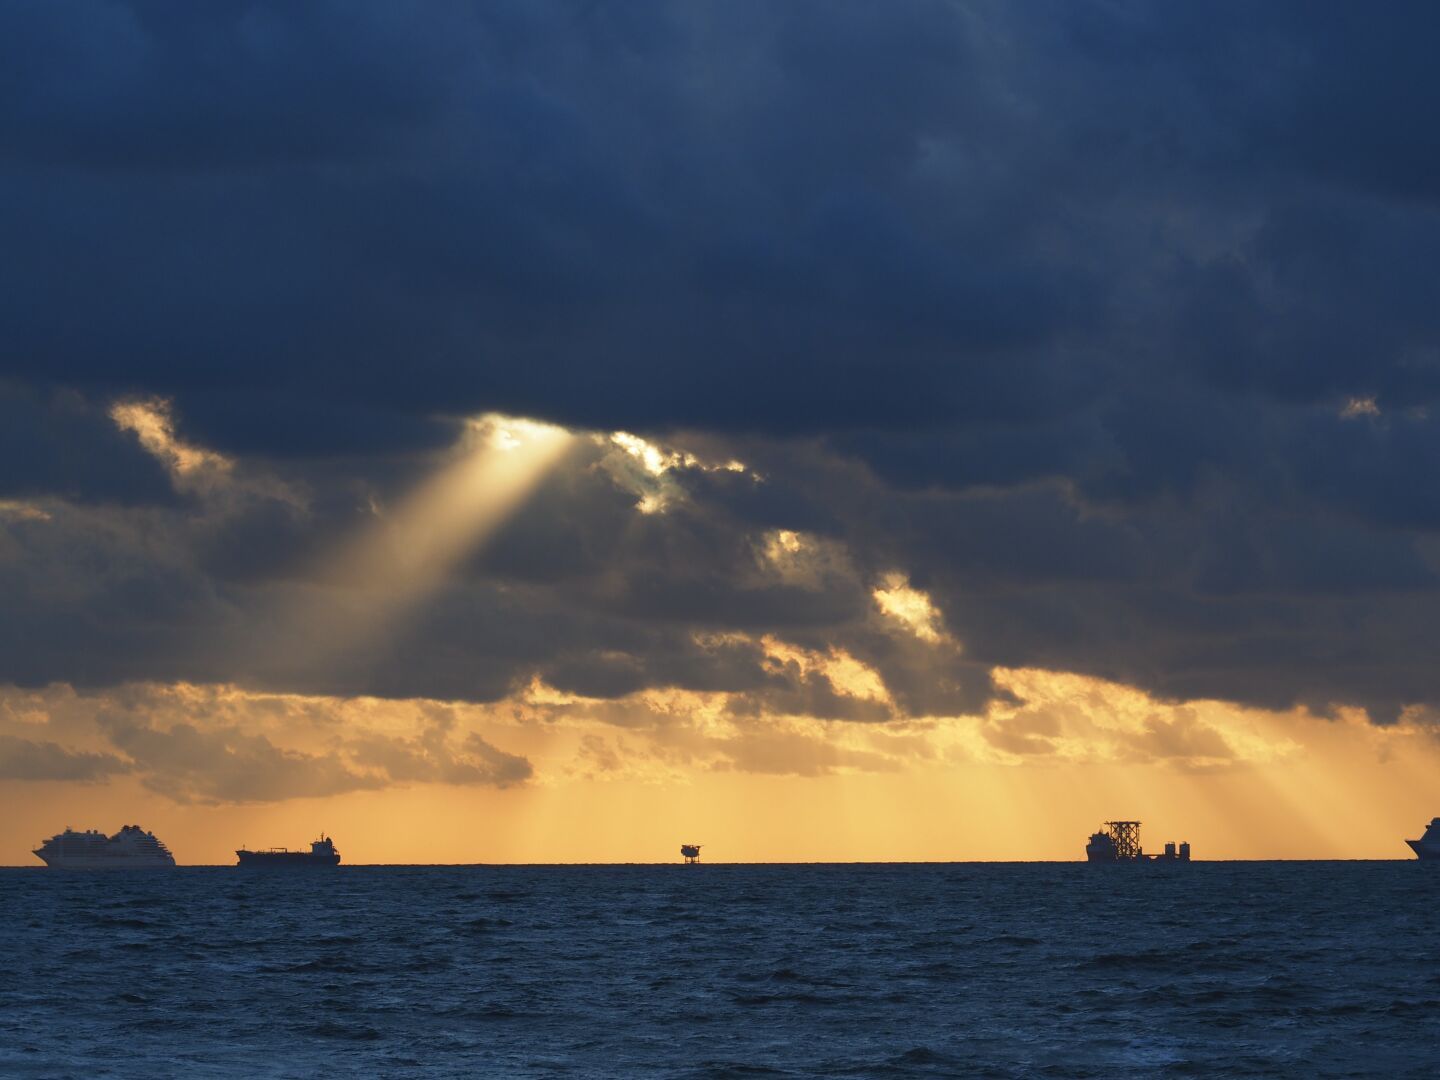 Schiffe am Horizont - ships on the horizon

#sundown #sunset #northsea #ships